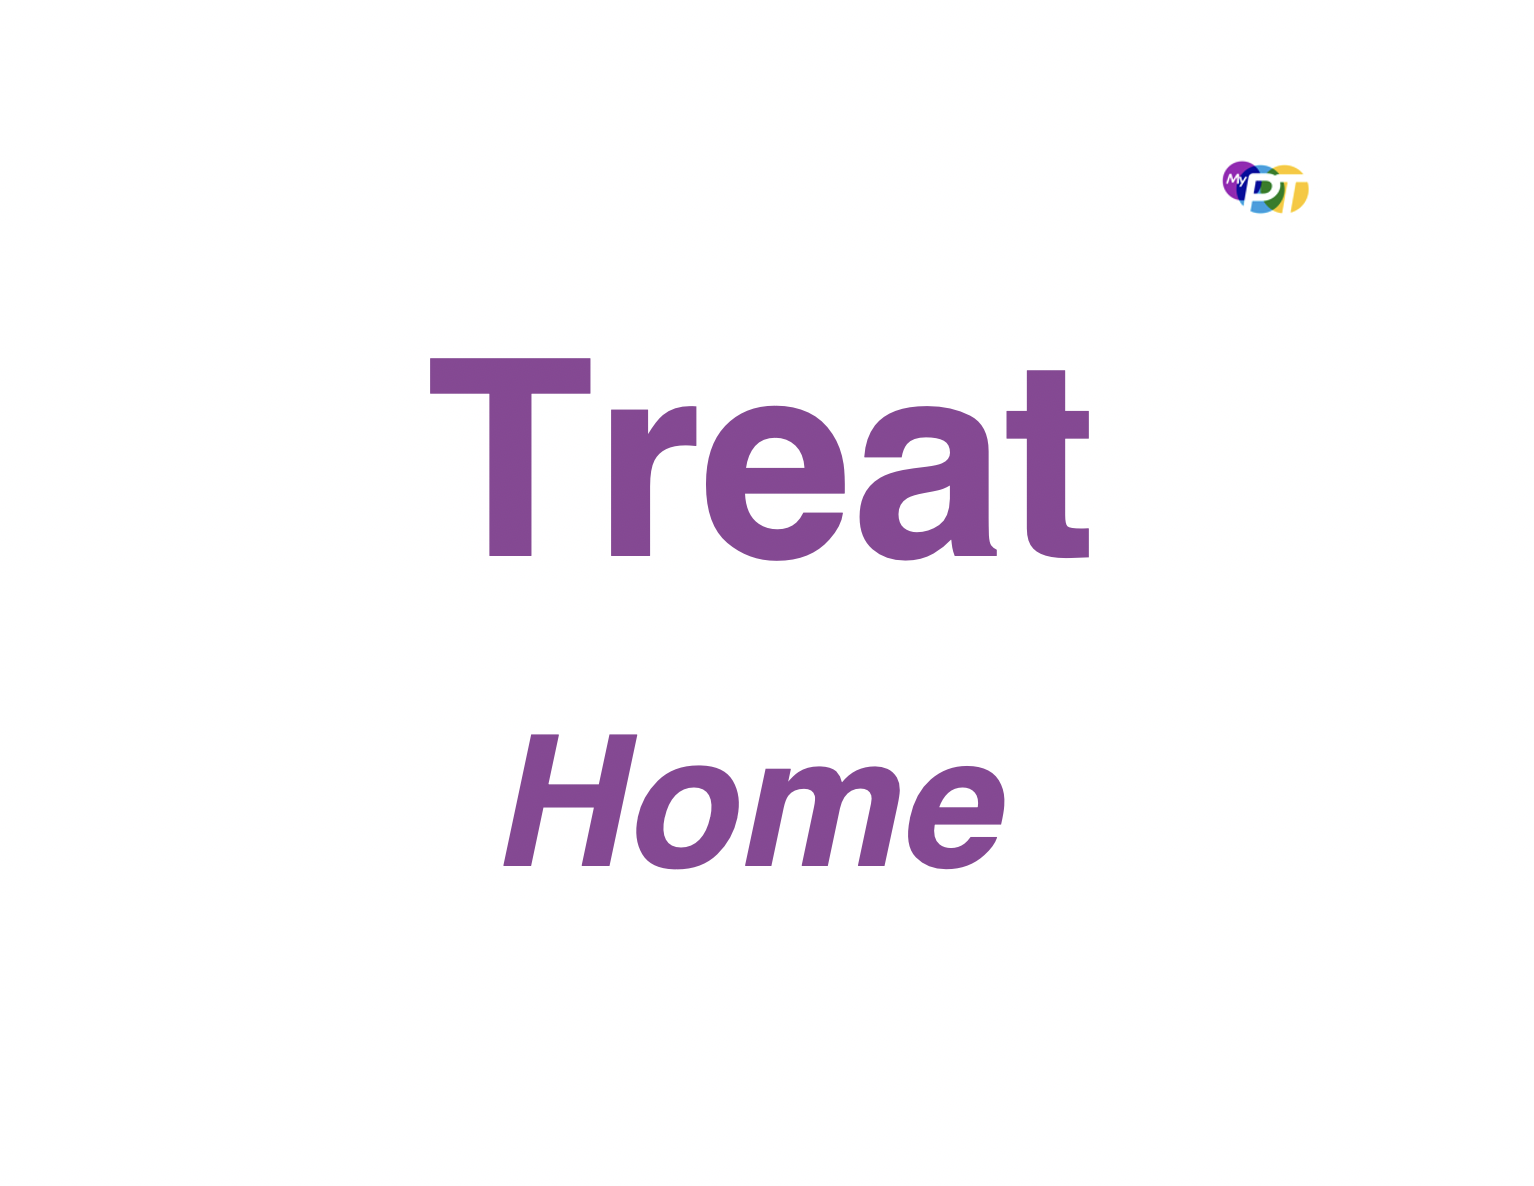 Home: Treatment